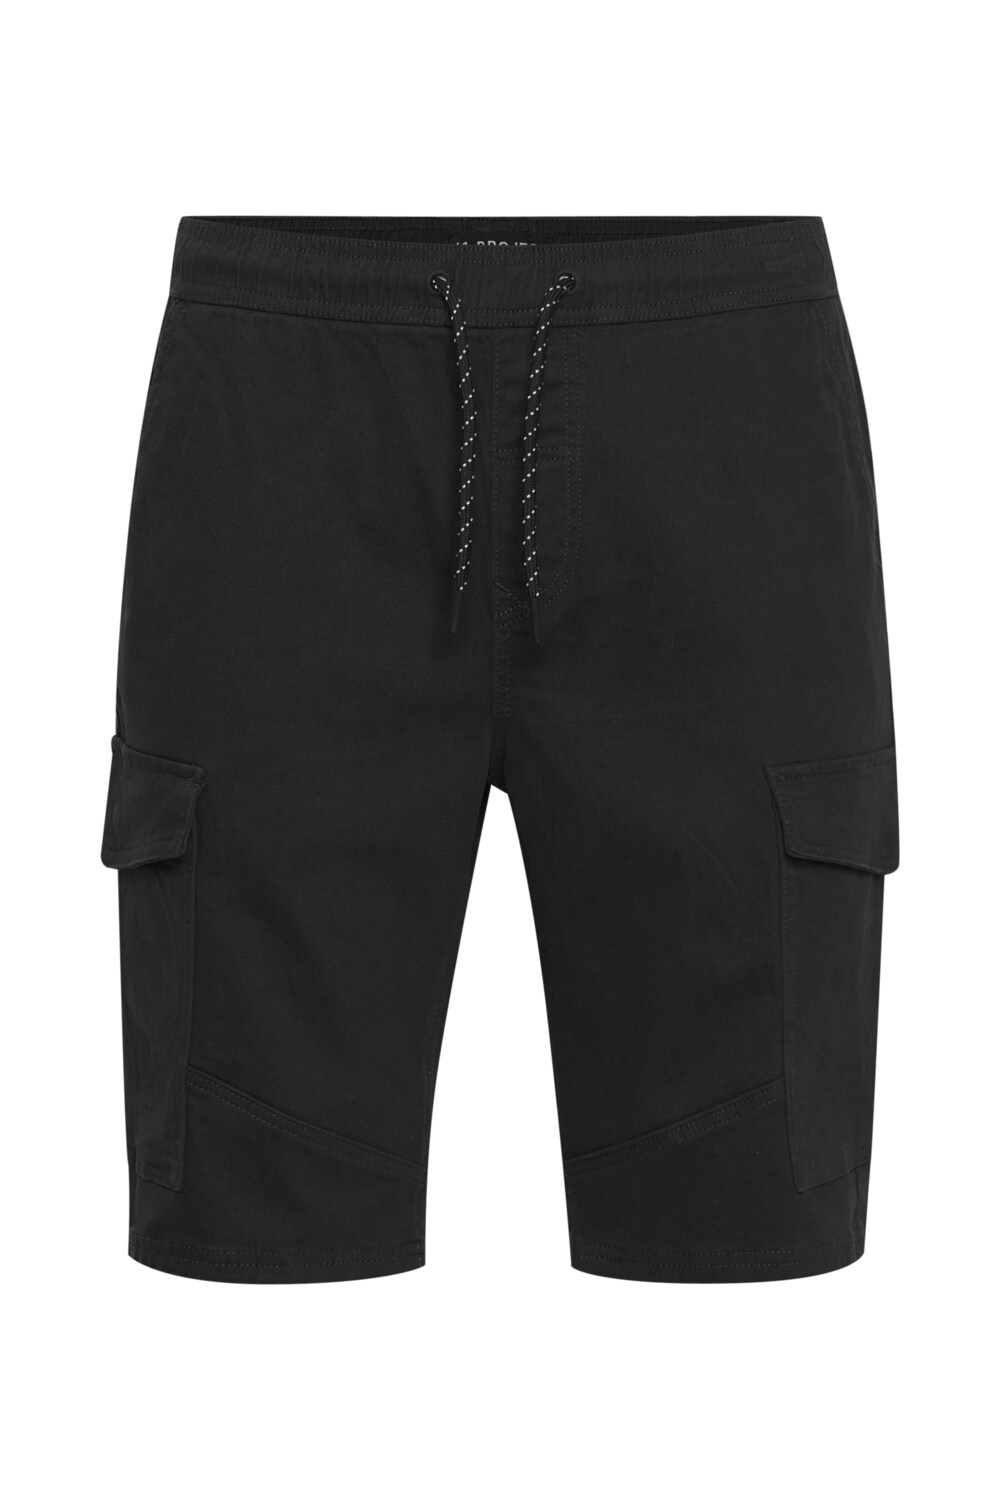 Обычные брюки 11 Project PRGarikko, черный обычные брюки чинос 11 project бежевый